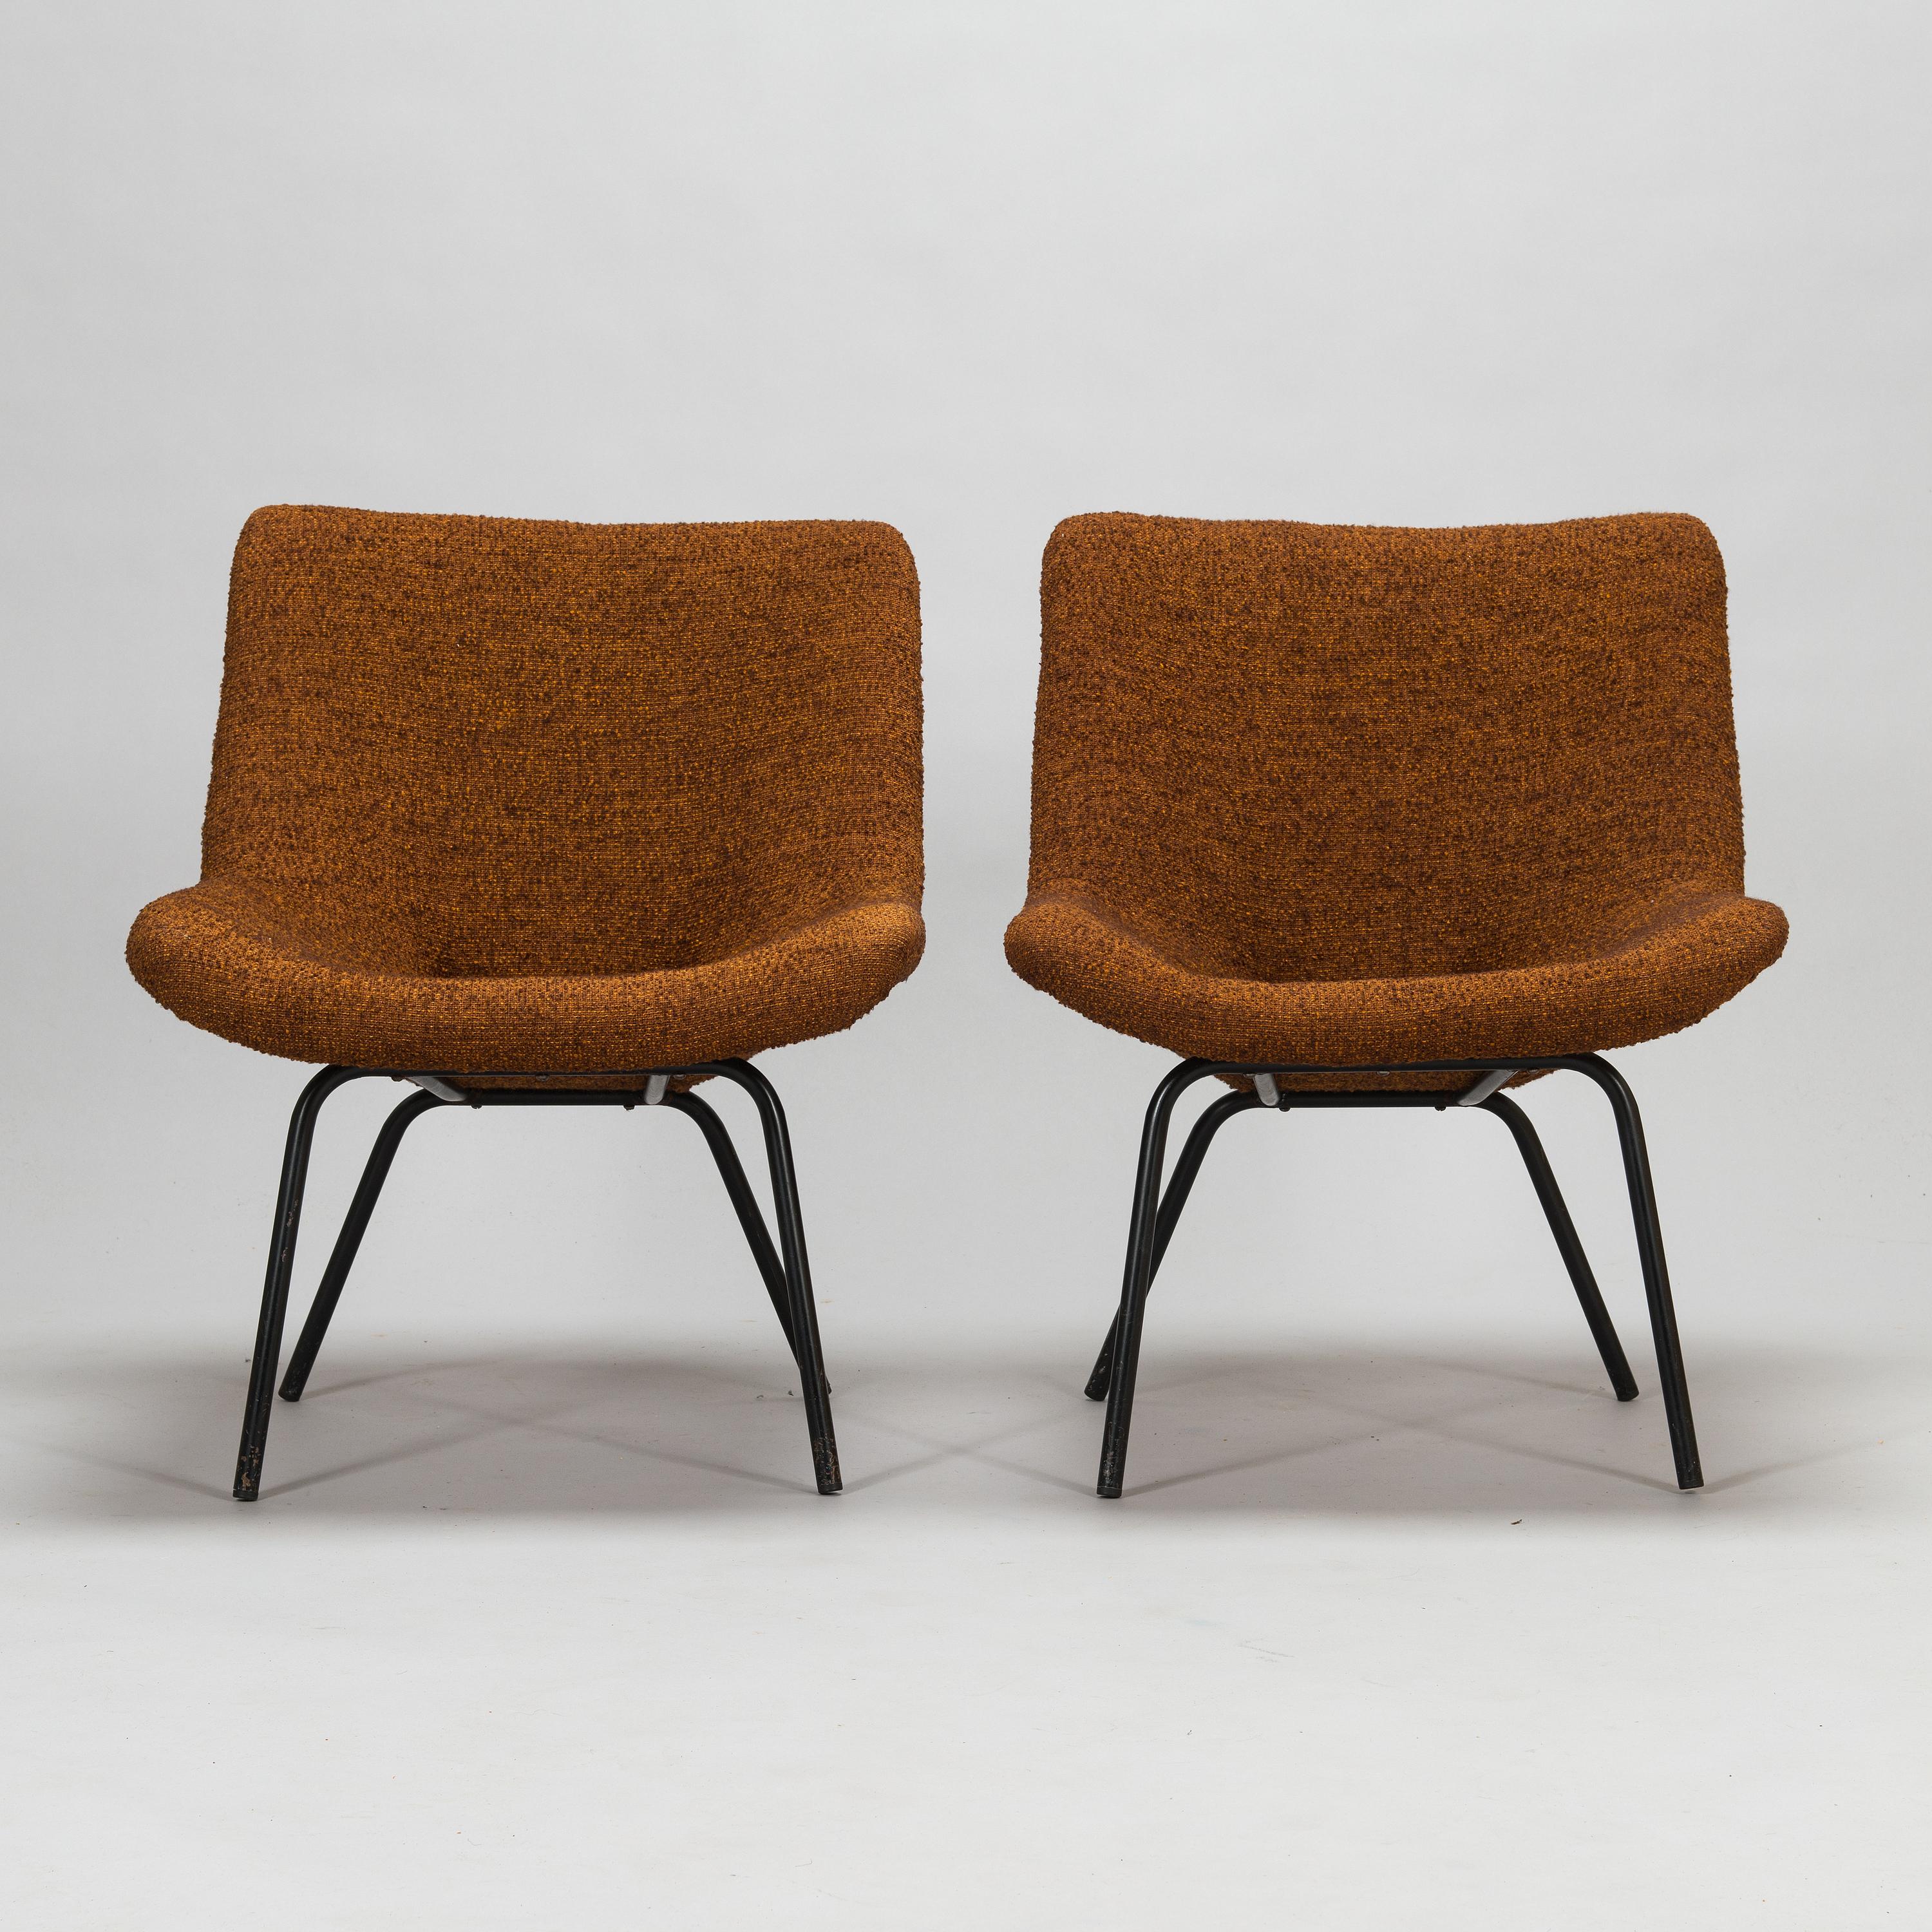 Seltenes Paar skandinavischer moderner Sessel, Modell 